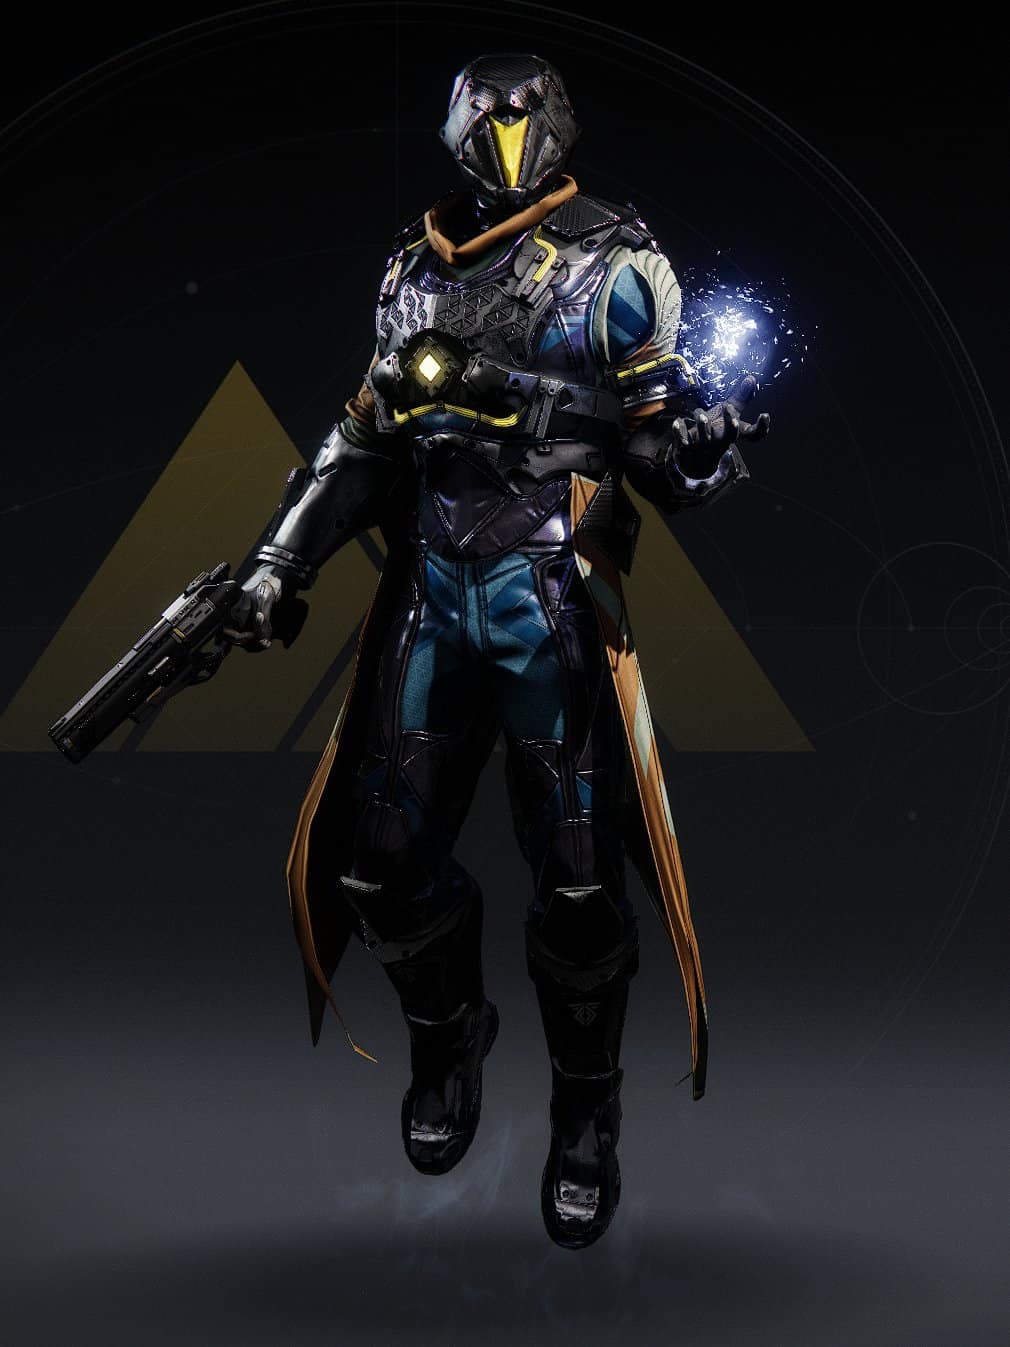 Warmind's Avatar armor Warlock